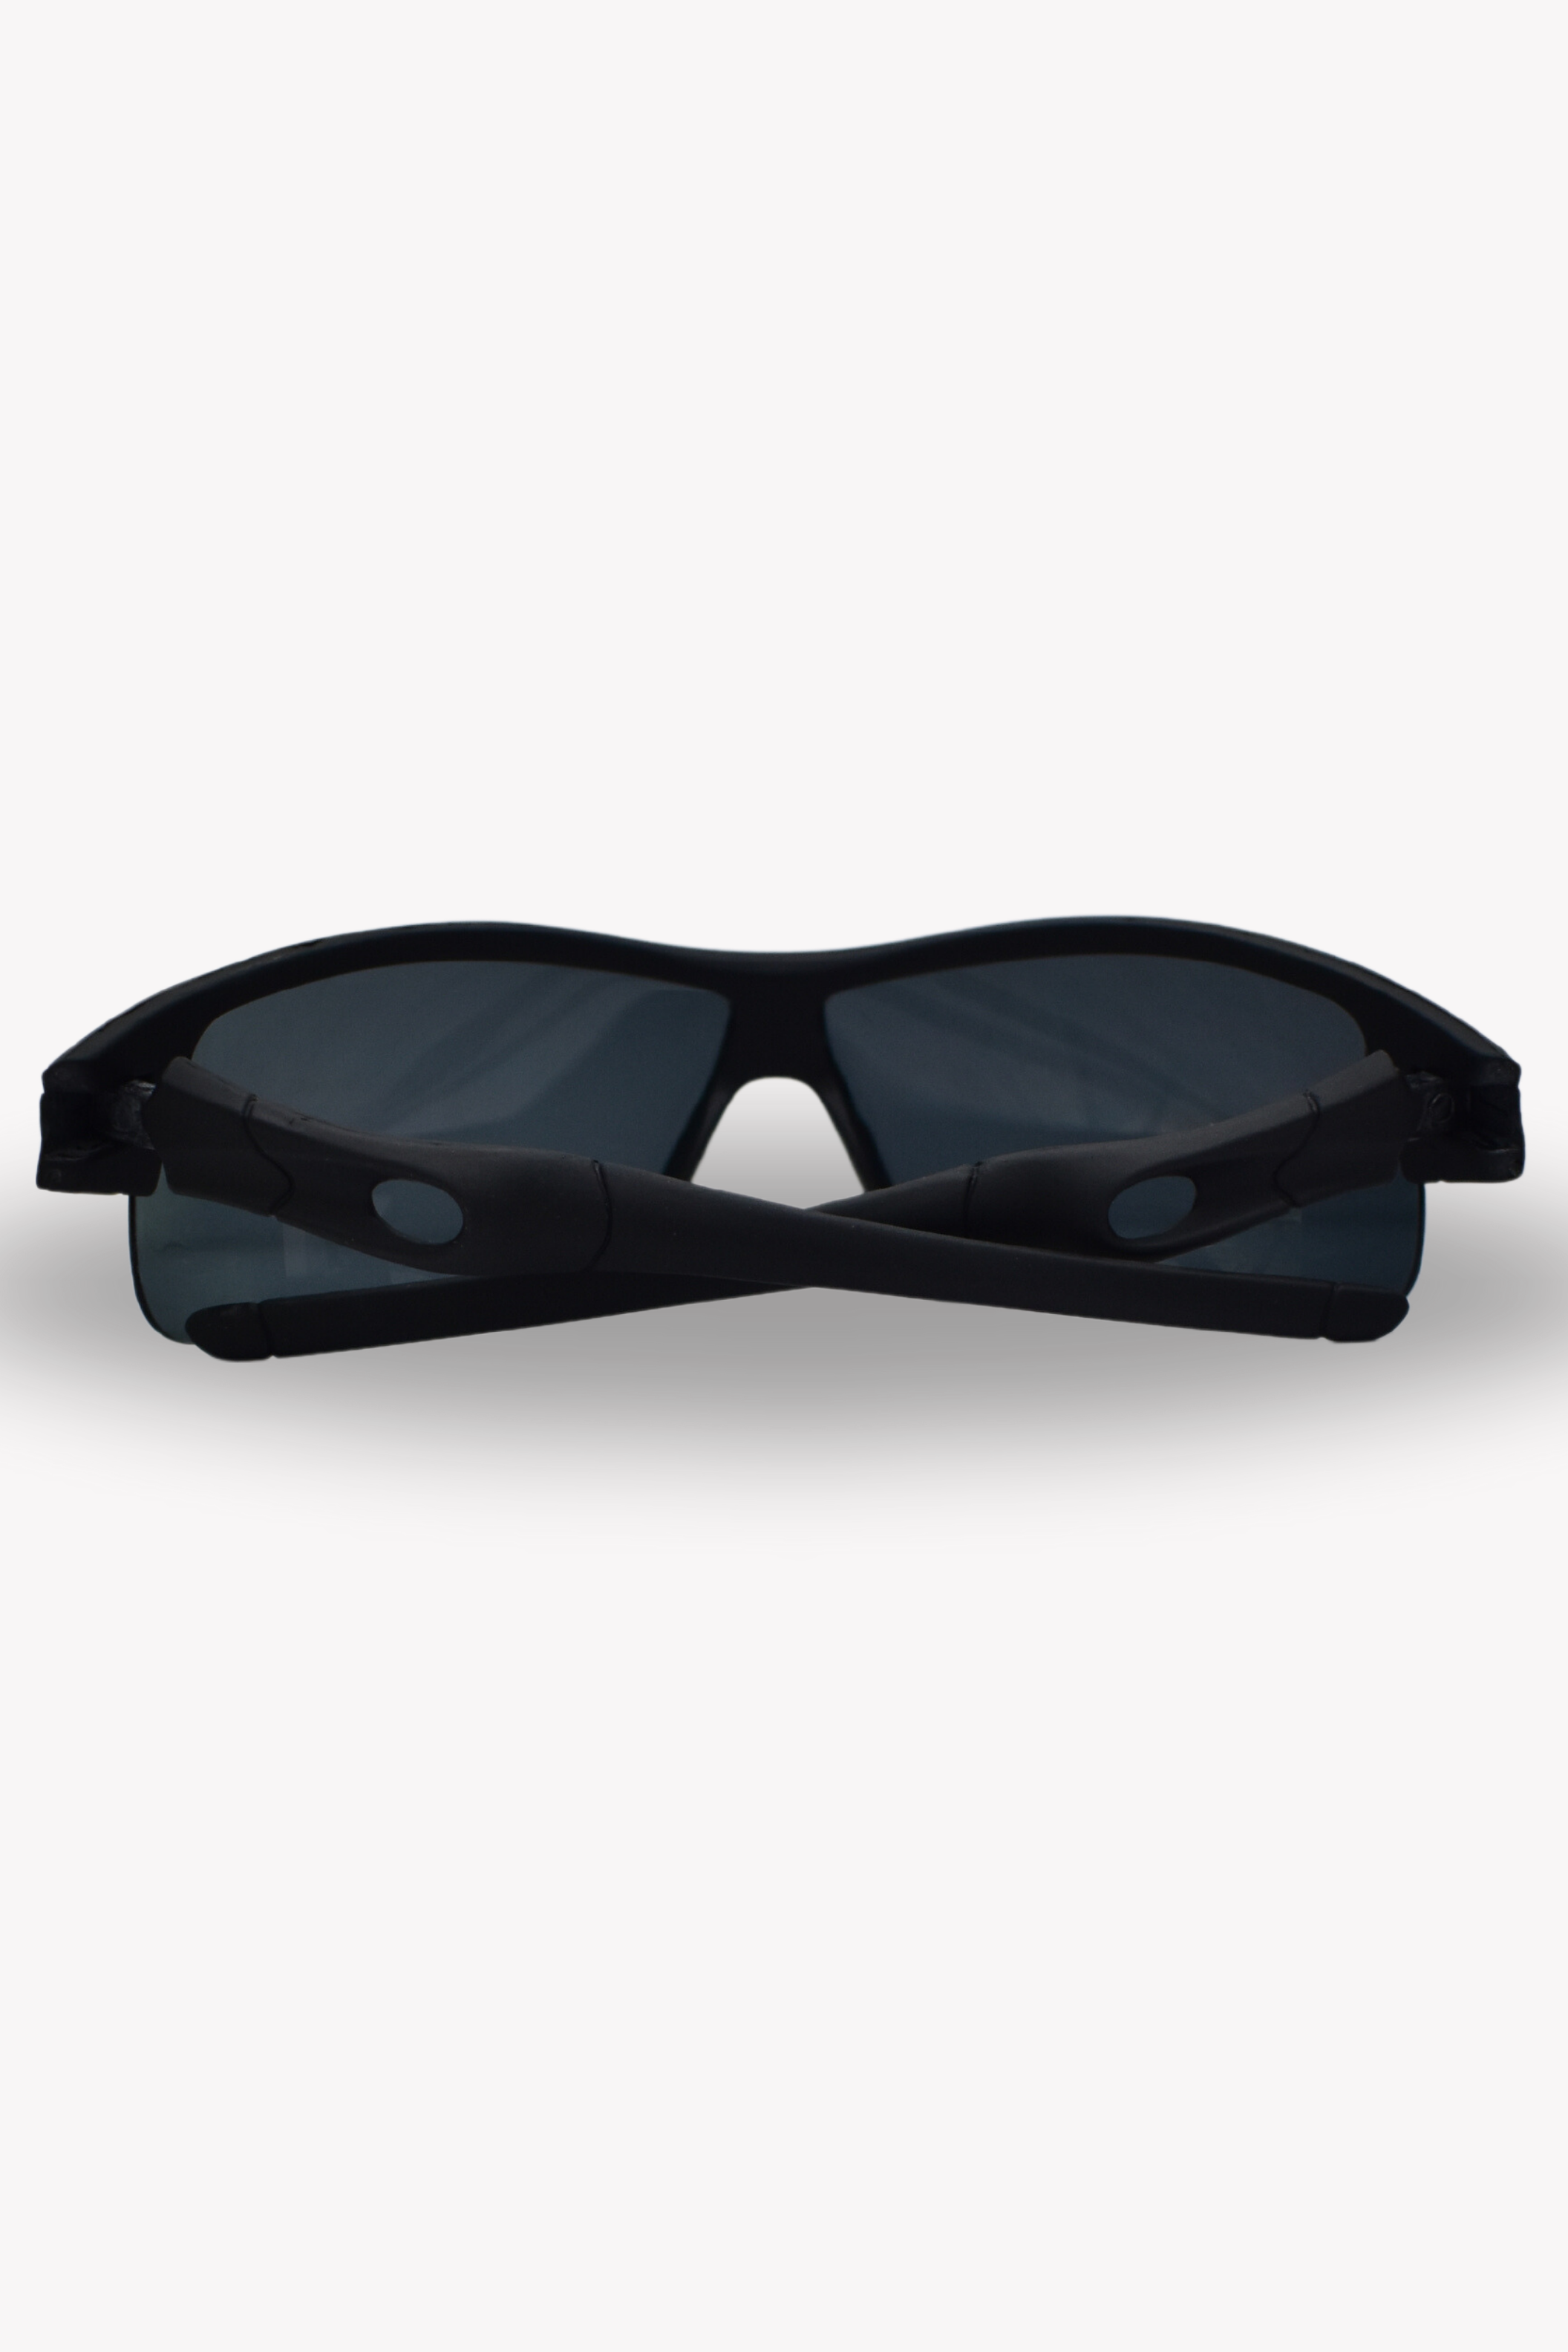 Oakley Adult Sun Glasses  sports black